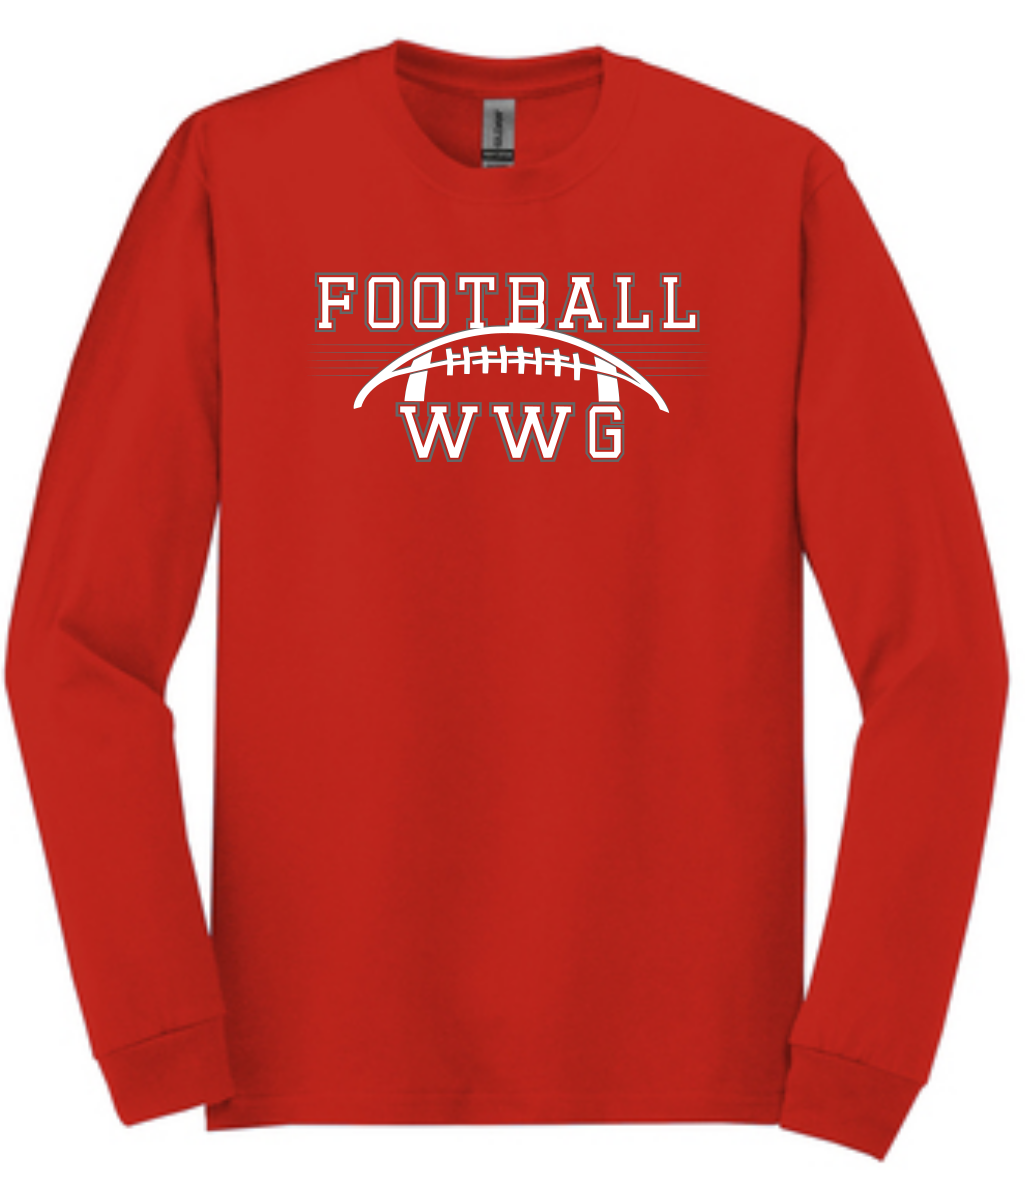 WWG Football : Option 1 - Gildan Long Sleeve Shirt - Unisex Red